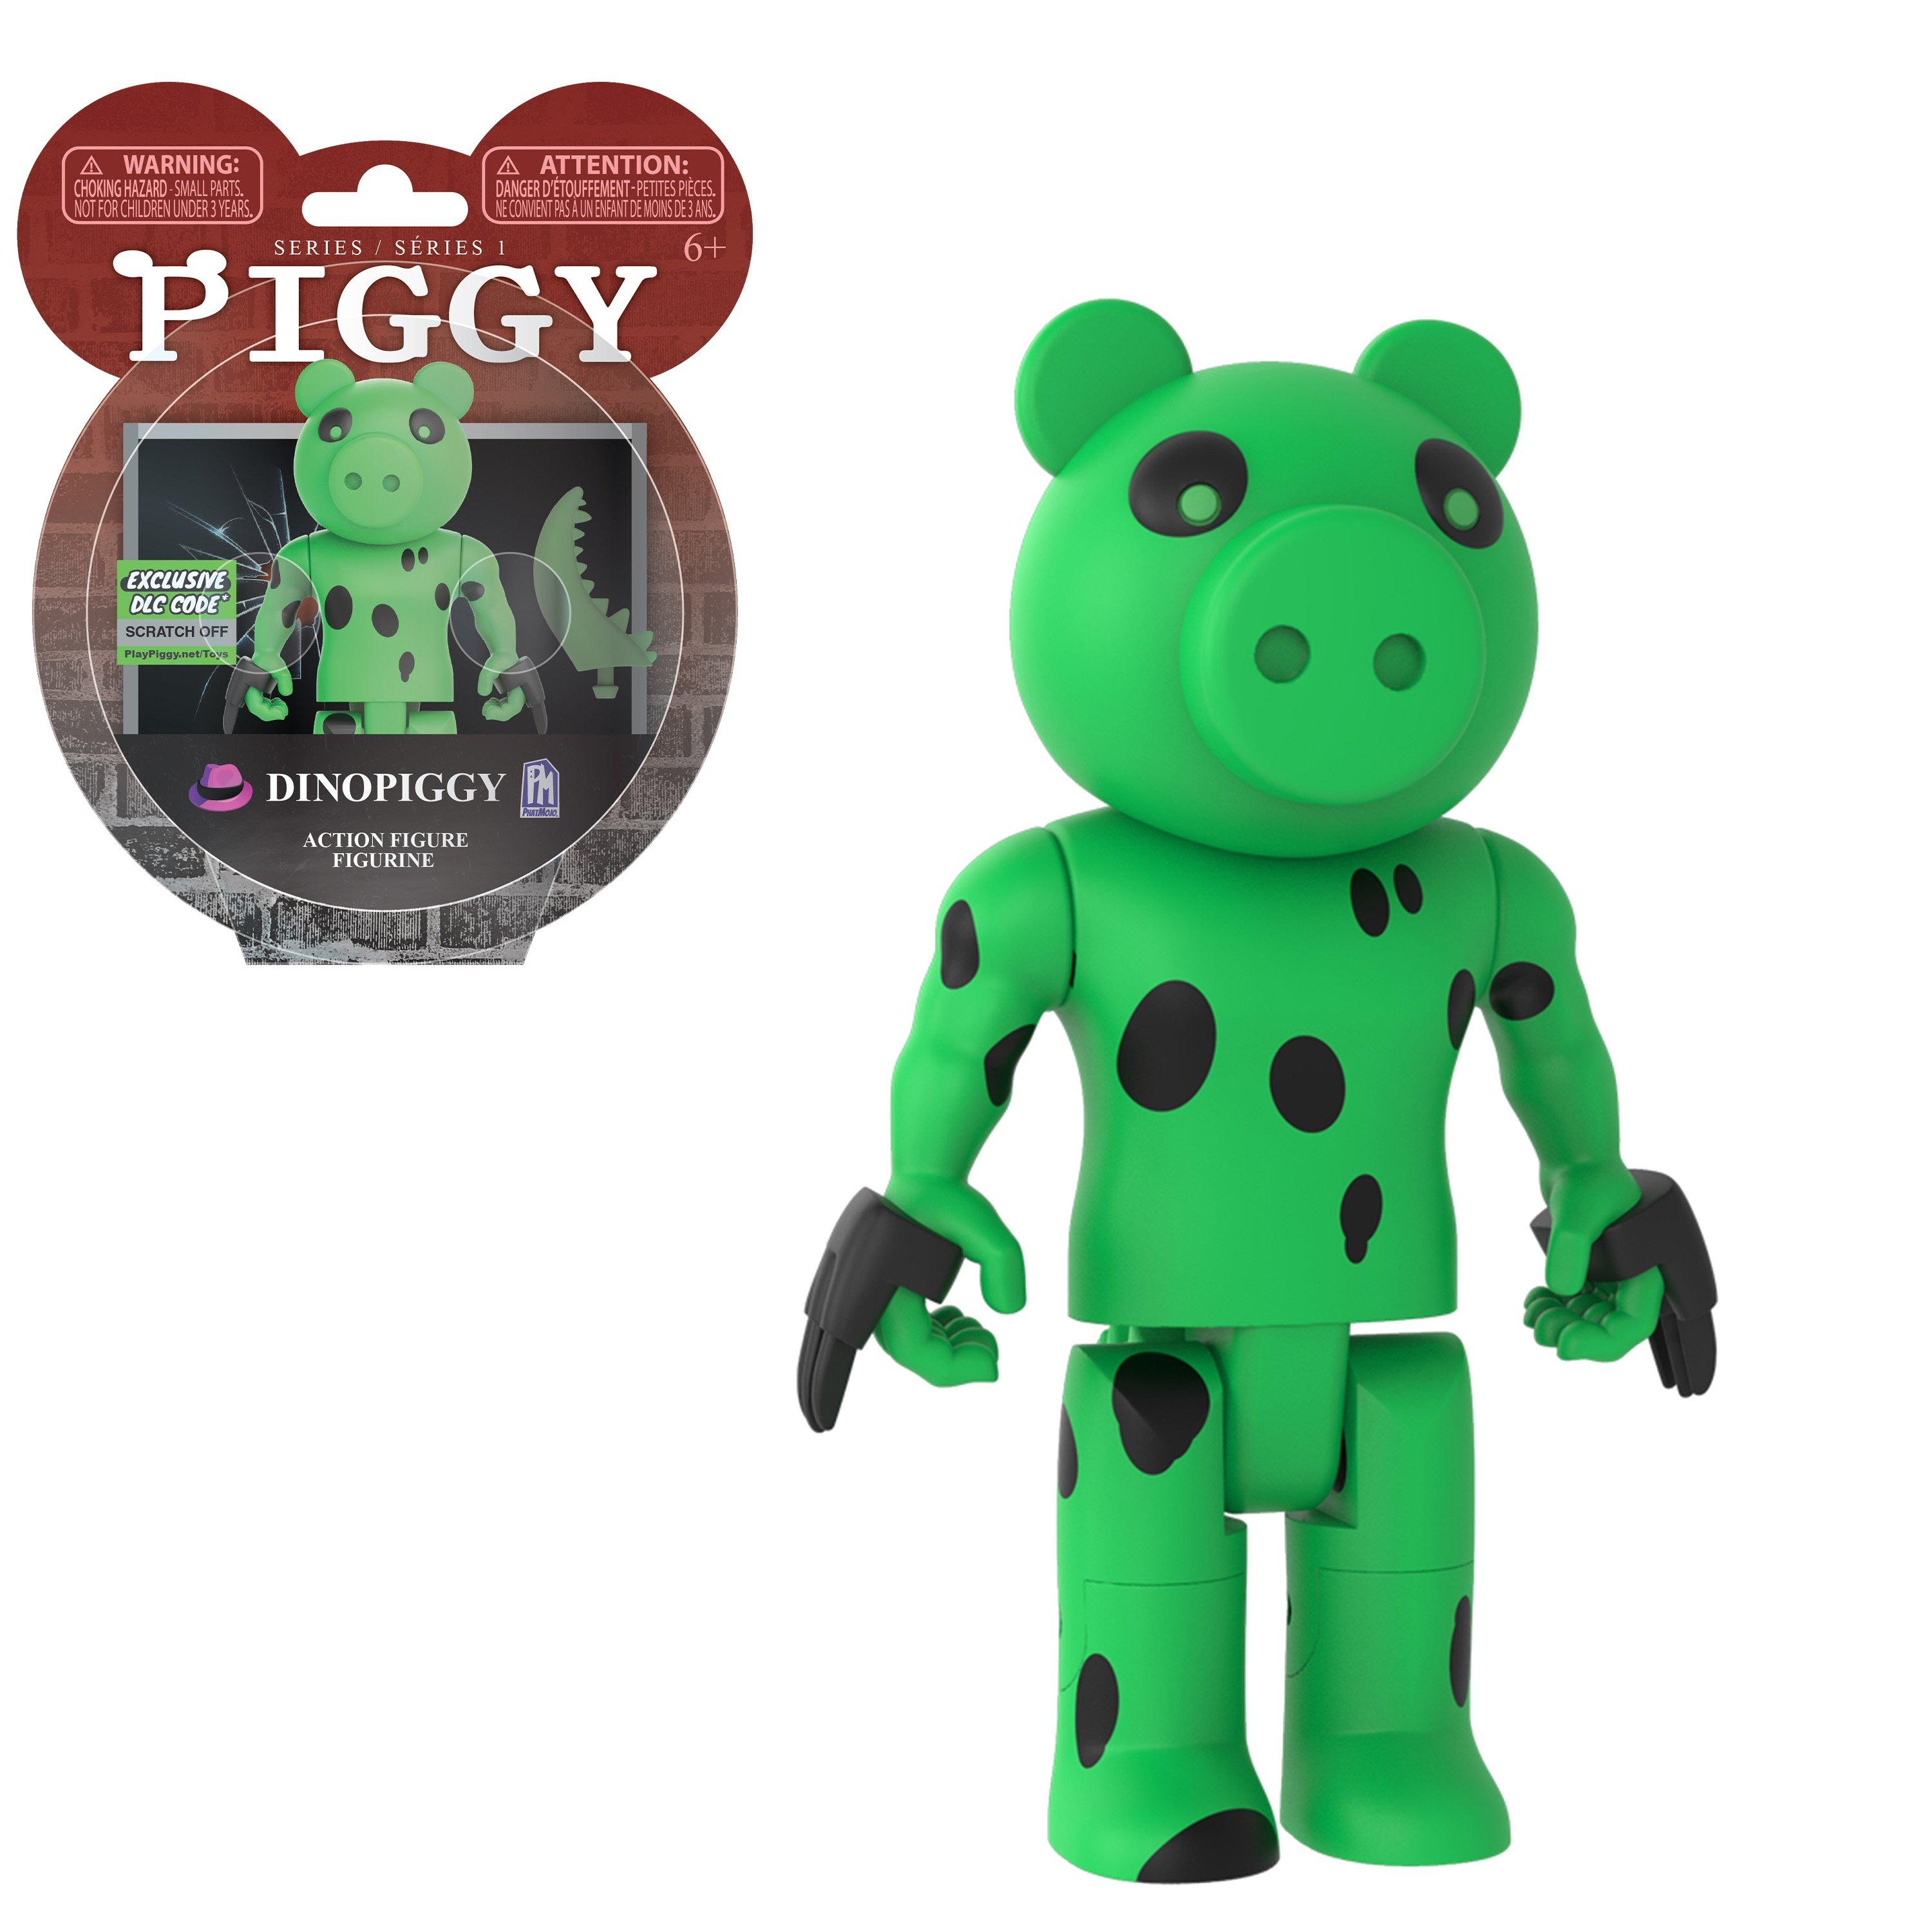 Piggy Dinopiggy Series 1 Action Figure Gamestop - gamestop roblox toys